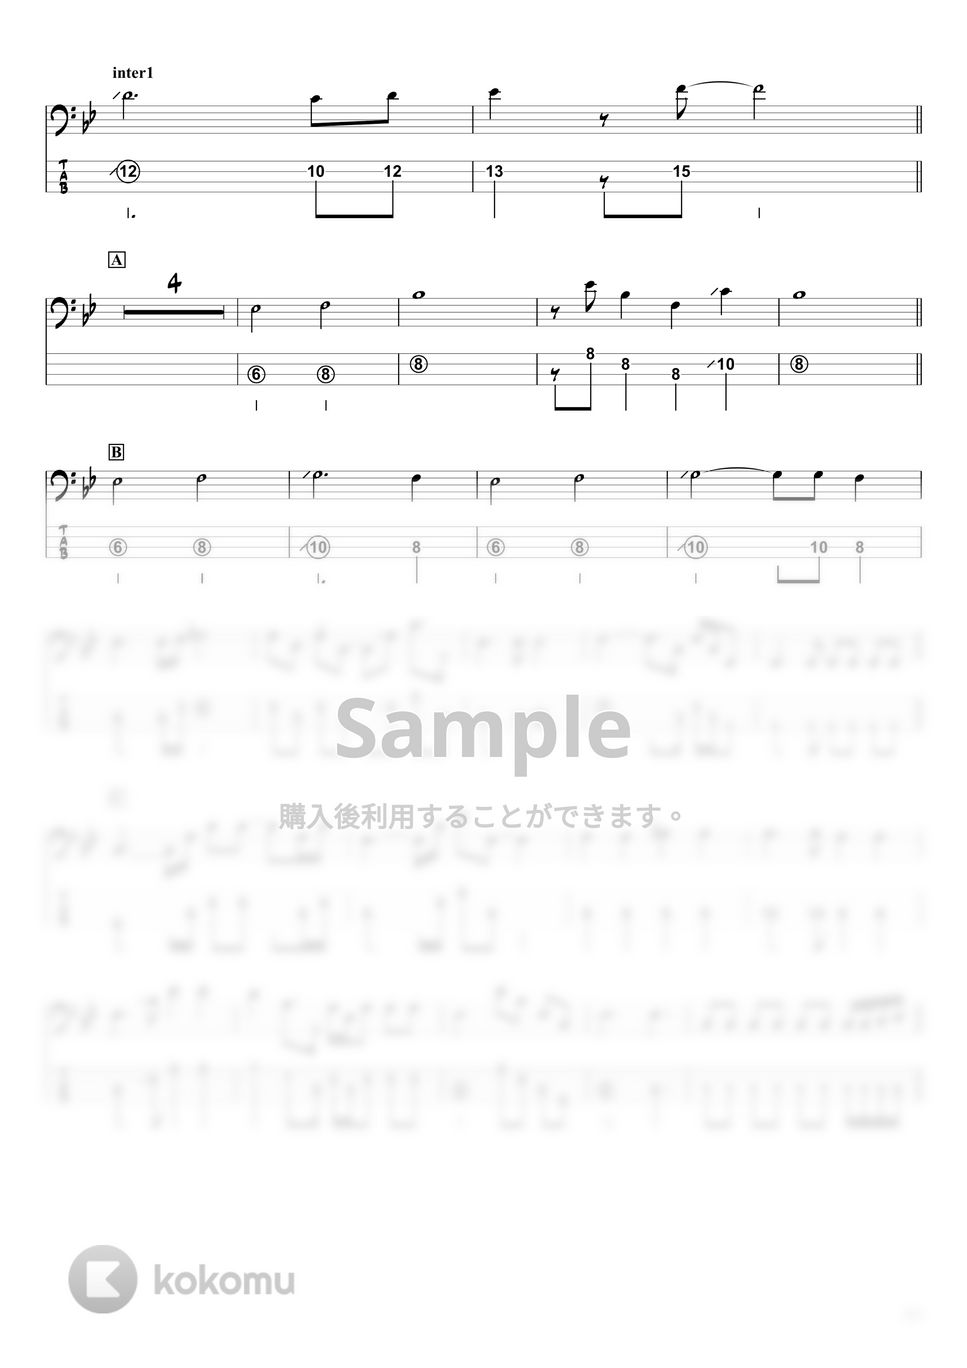 Uru - それを愛と呼ぶなら (ベースTAB譜☆4弦ベース対応) by swbass